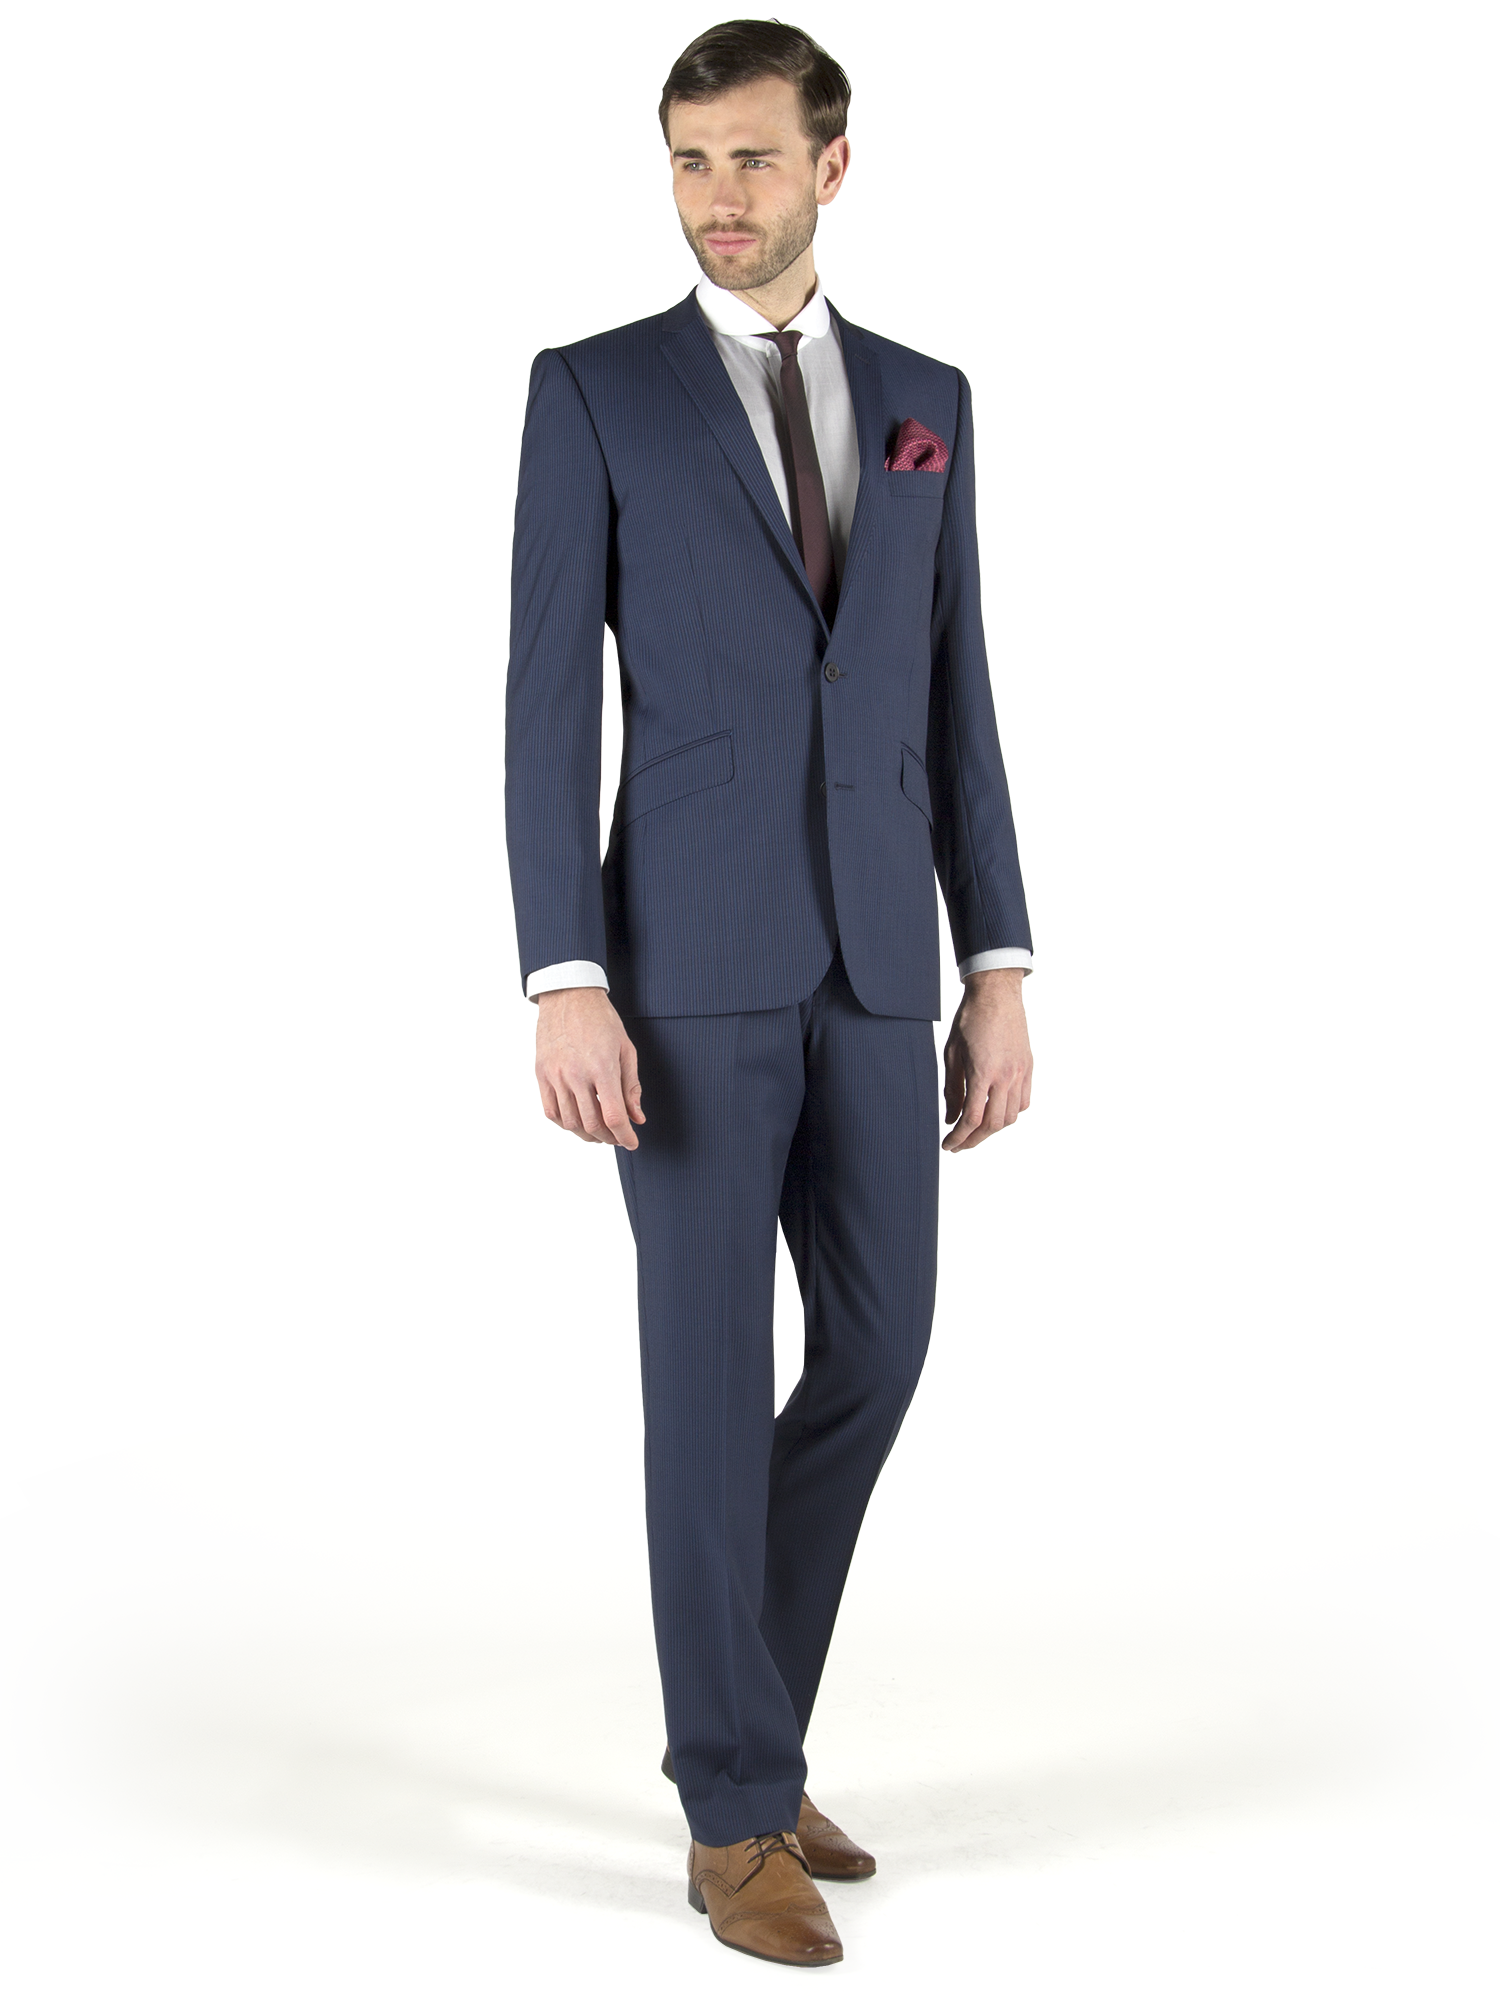 Men Suit PNG High-Quality Image